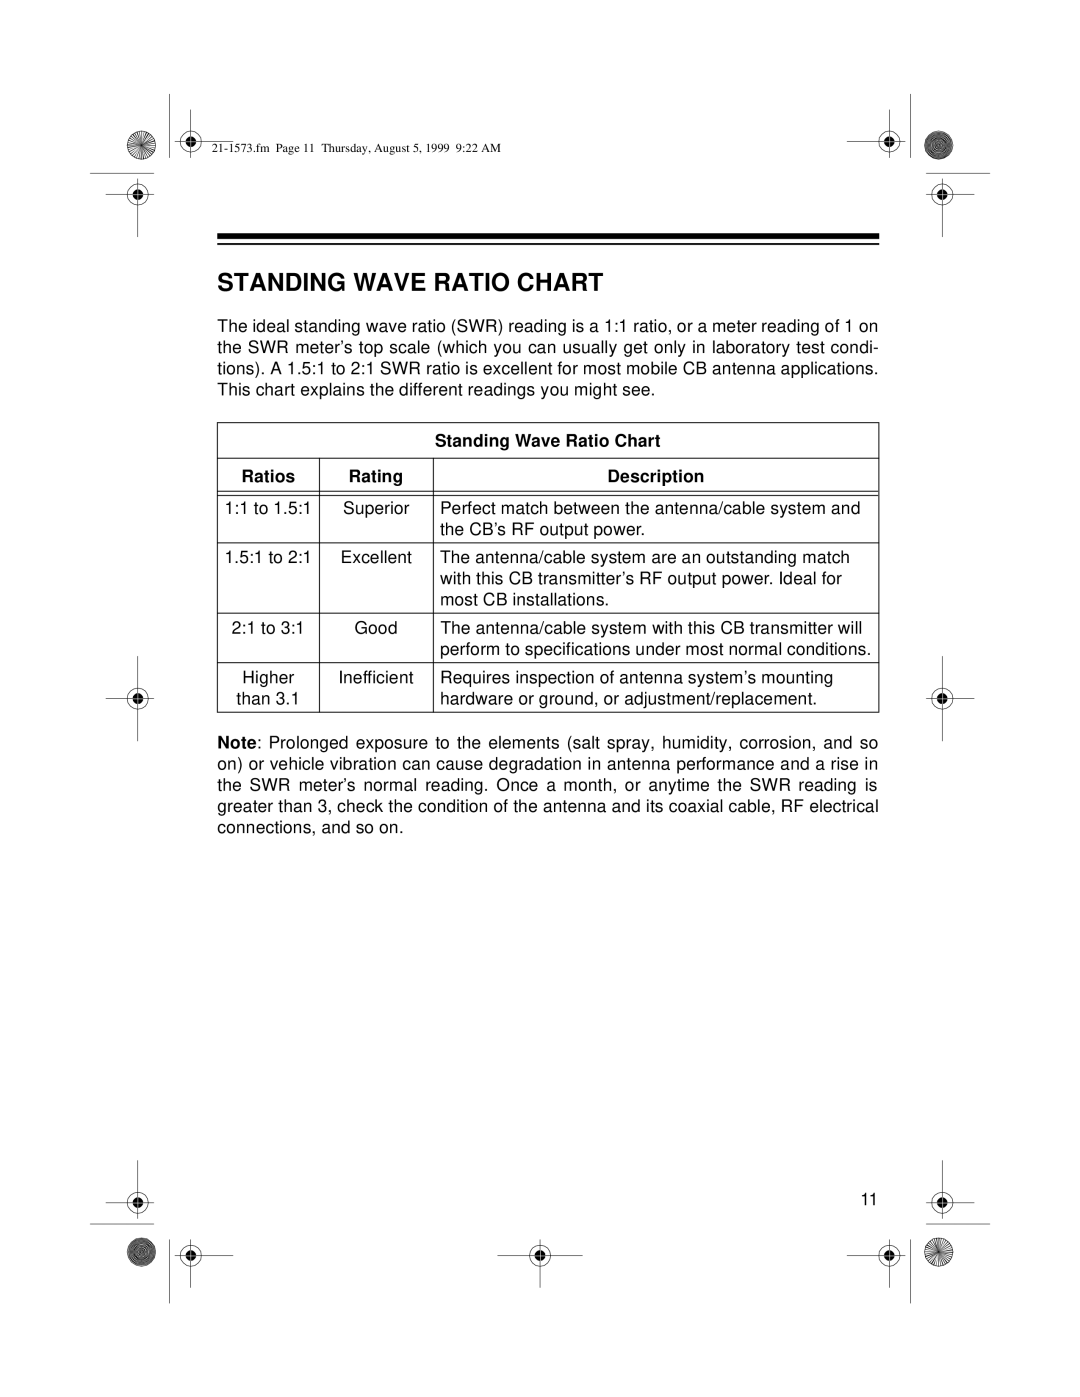 Samsung TRC-445 owner manual Standing Wave Ratio Chart, Ratios, Rating, Description 